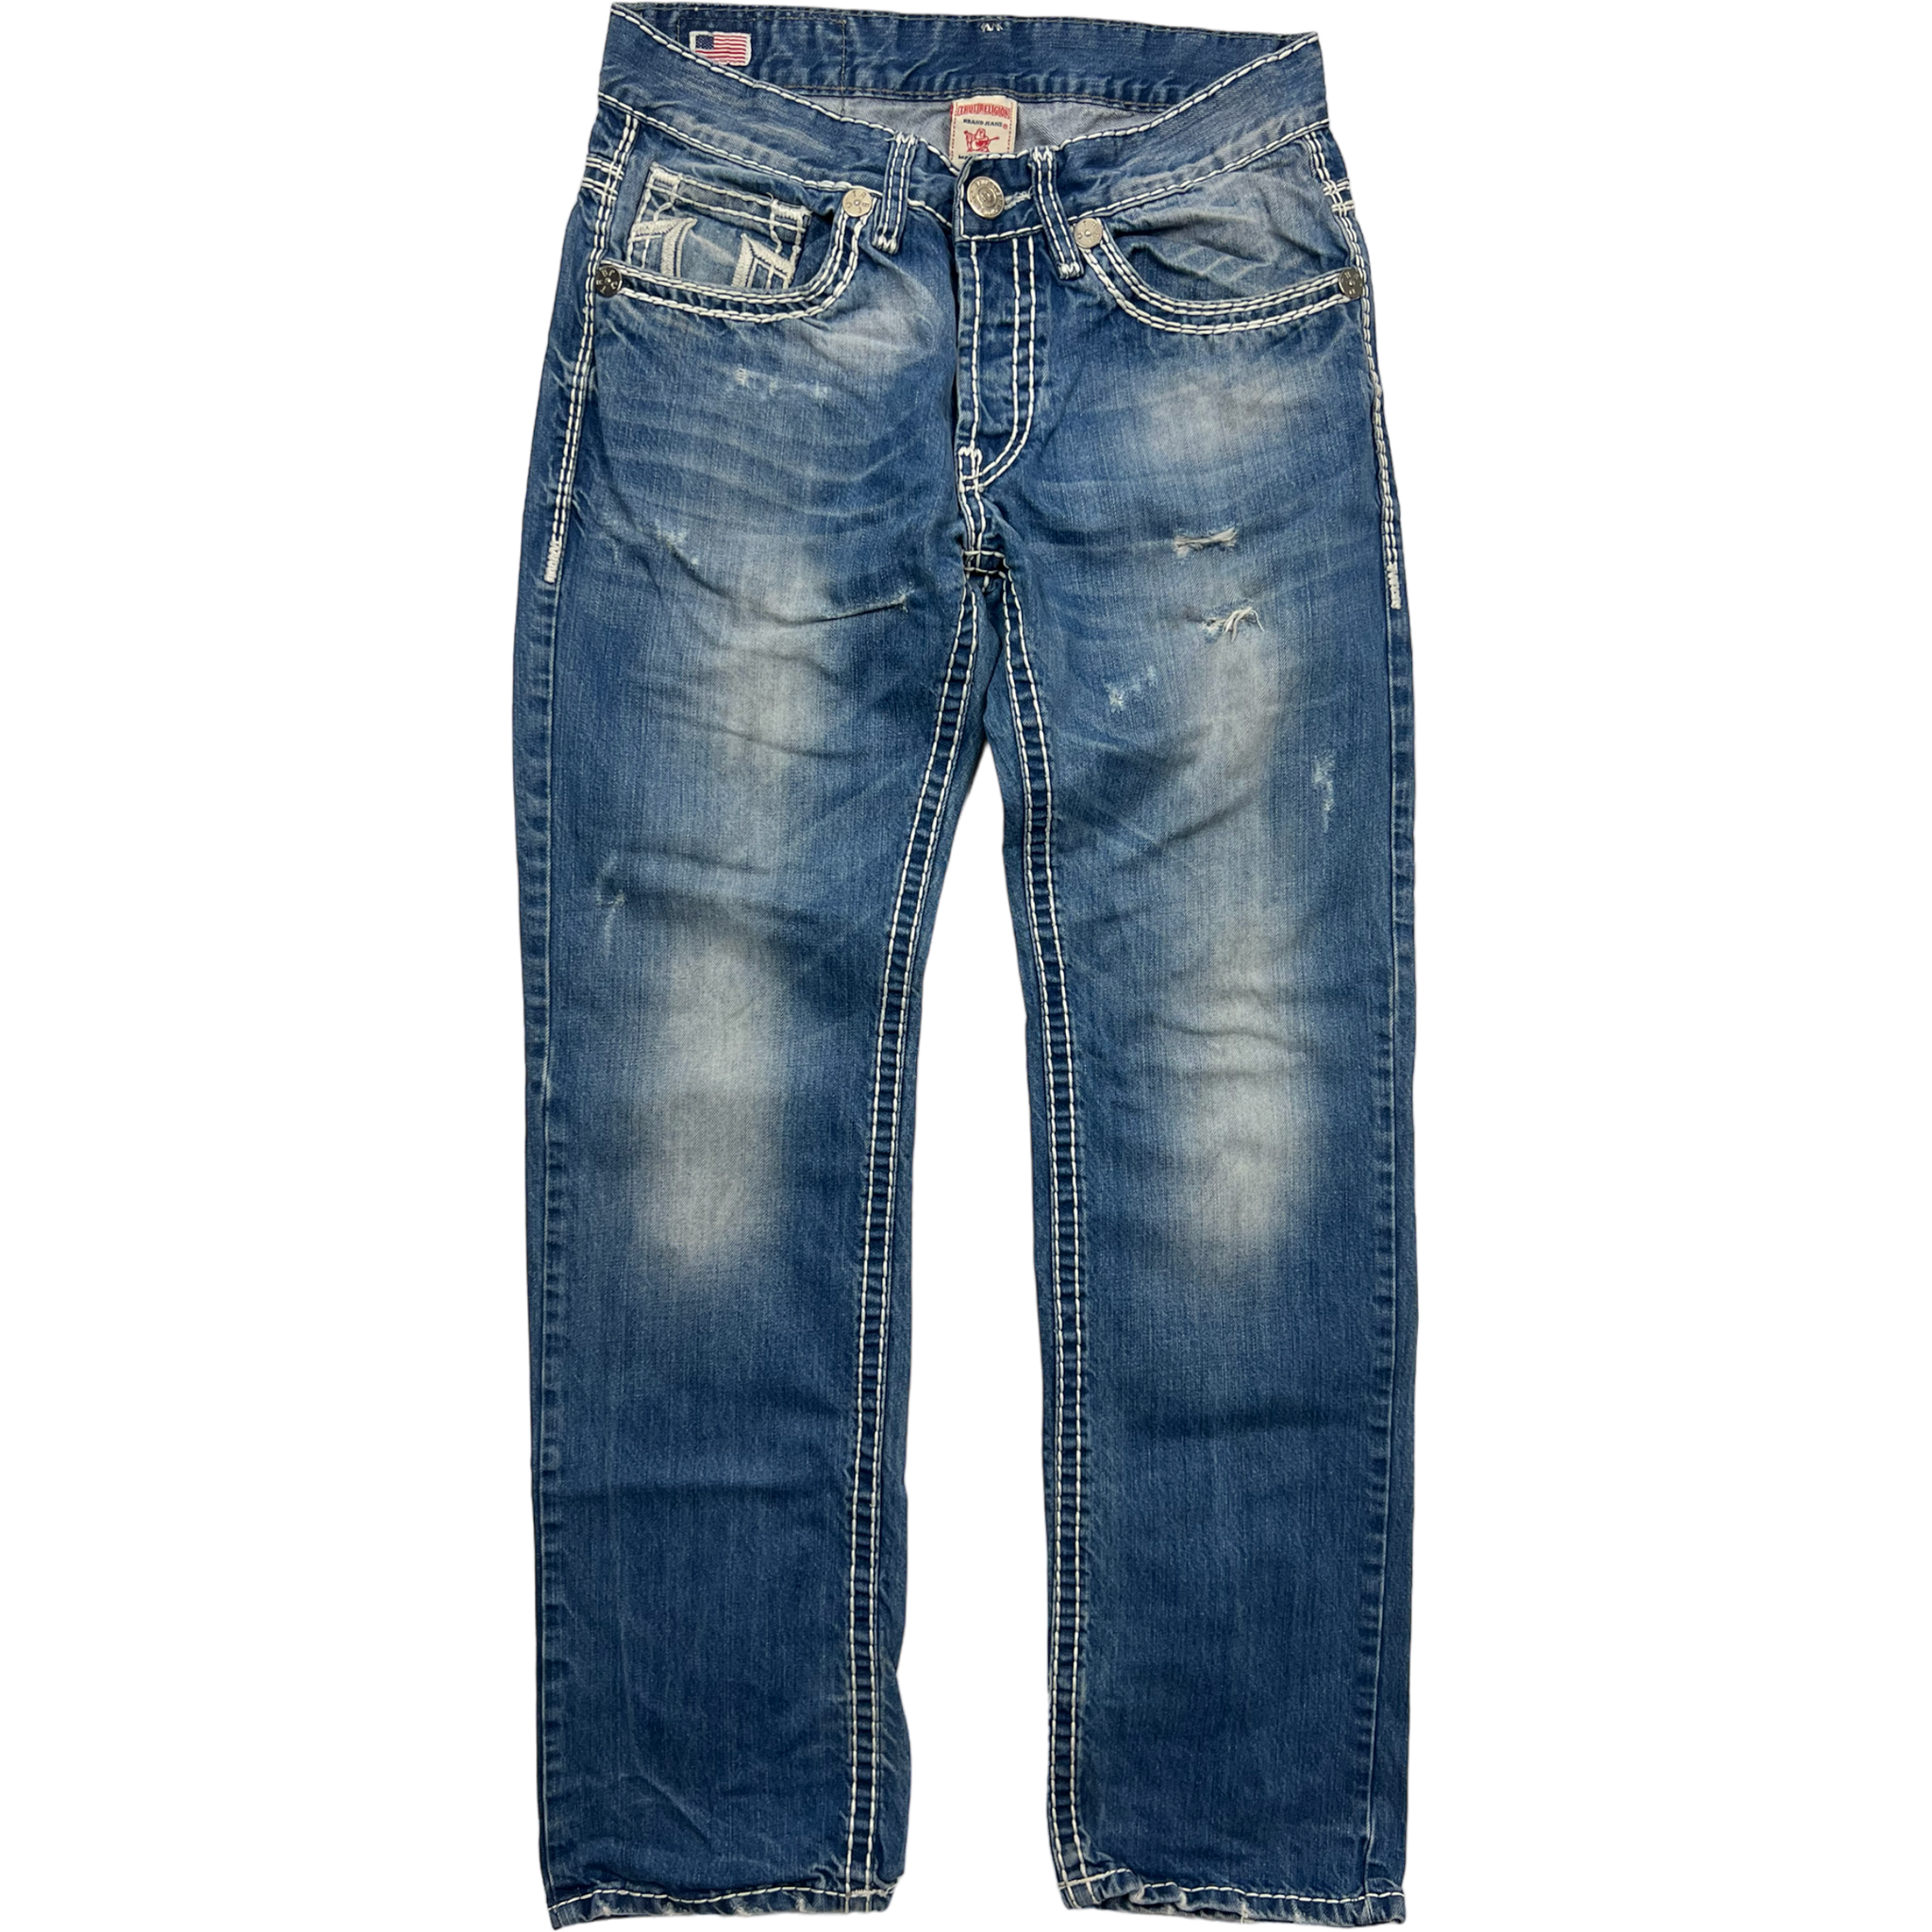 True Religion Jeans (34)